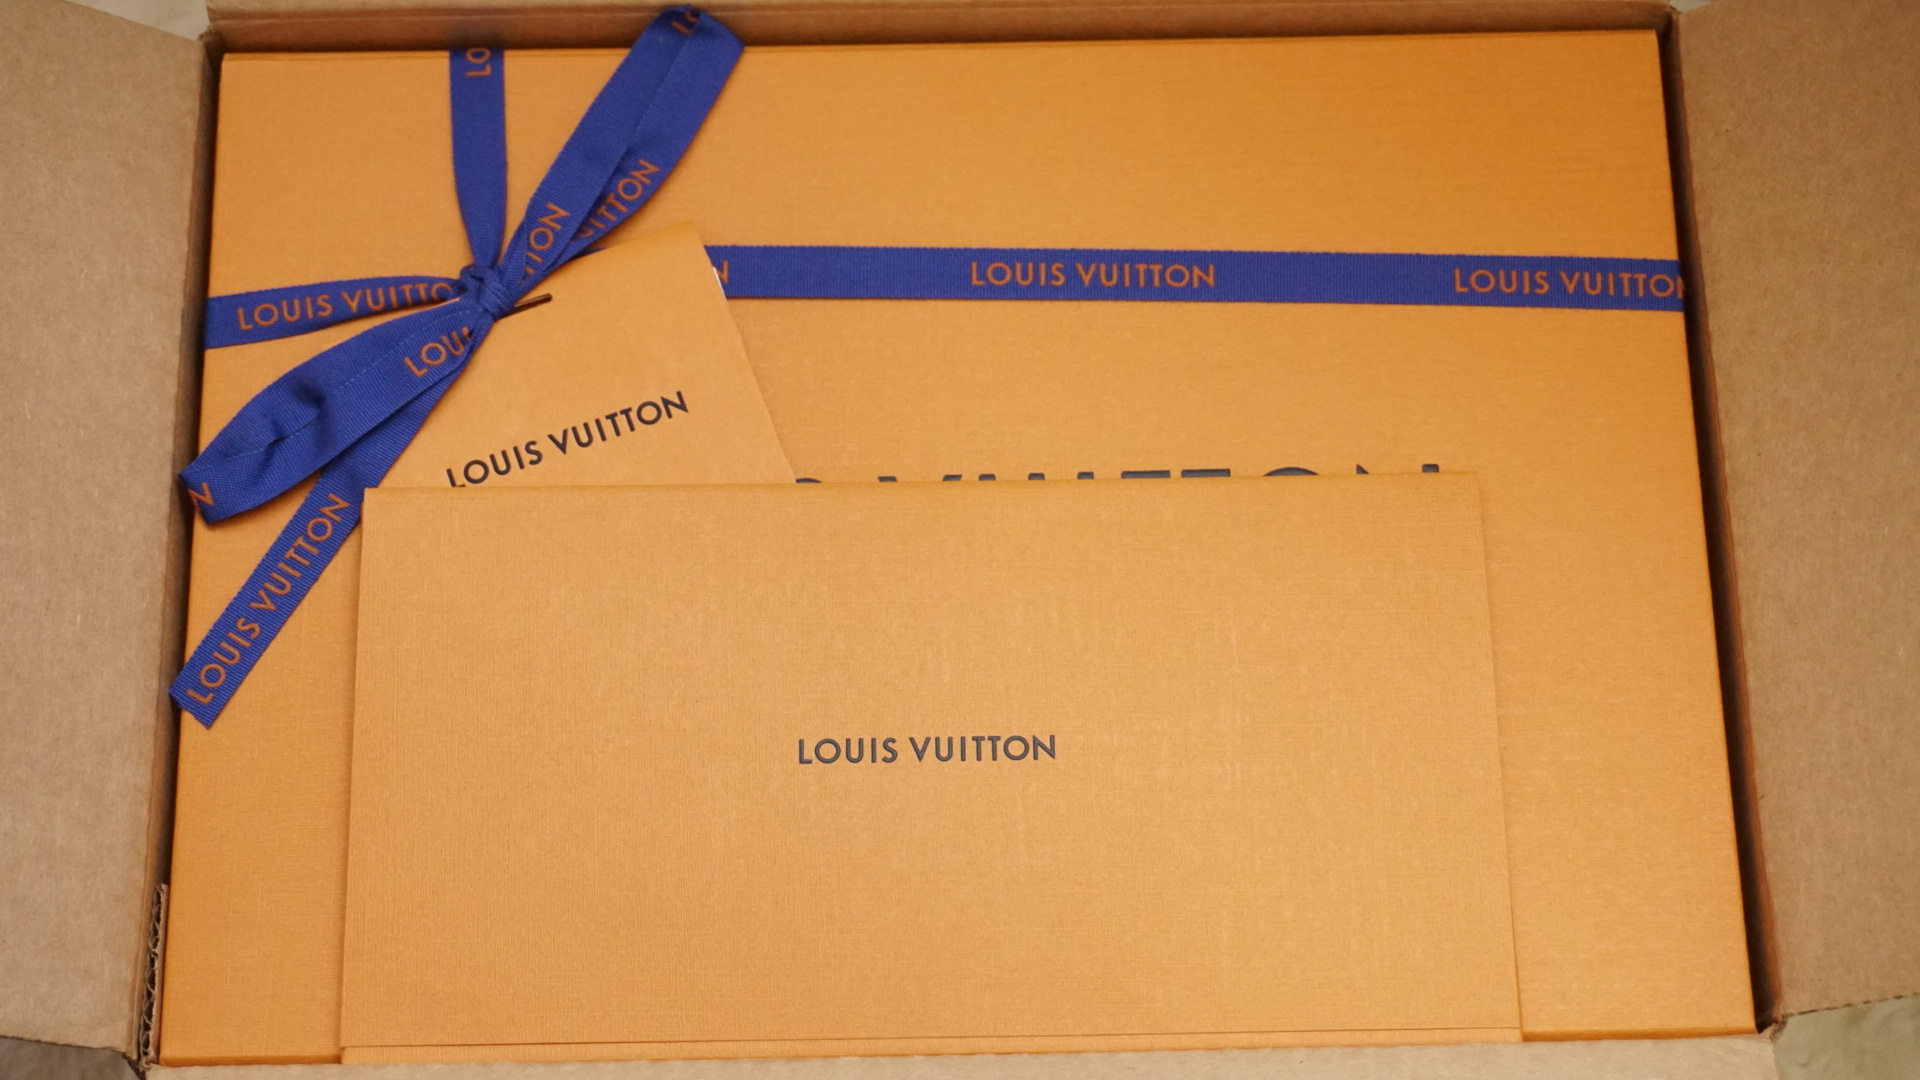 Louis Vuitton Monogram Sneaker Match-Up Eclipse Review Unboxing